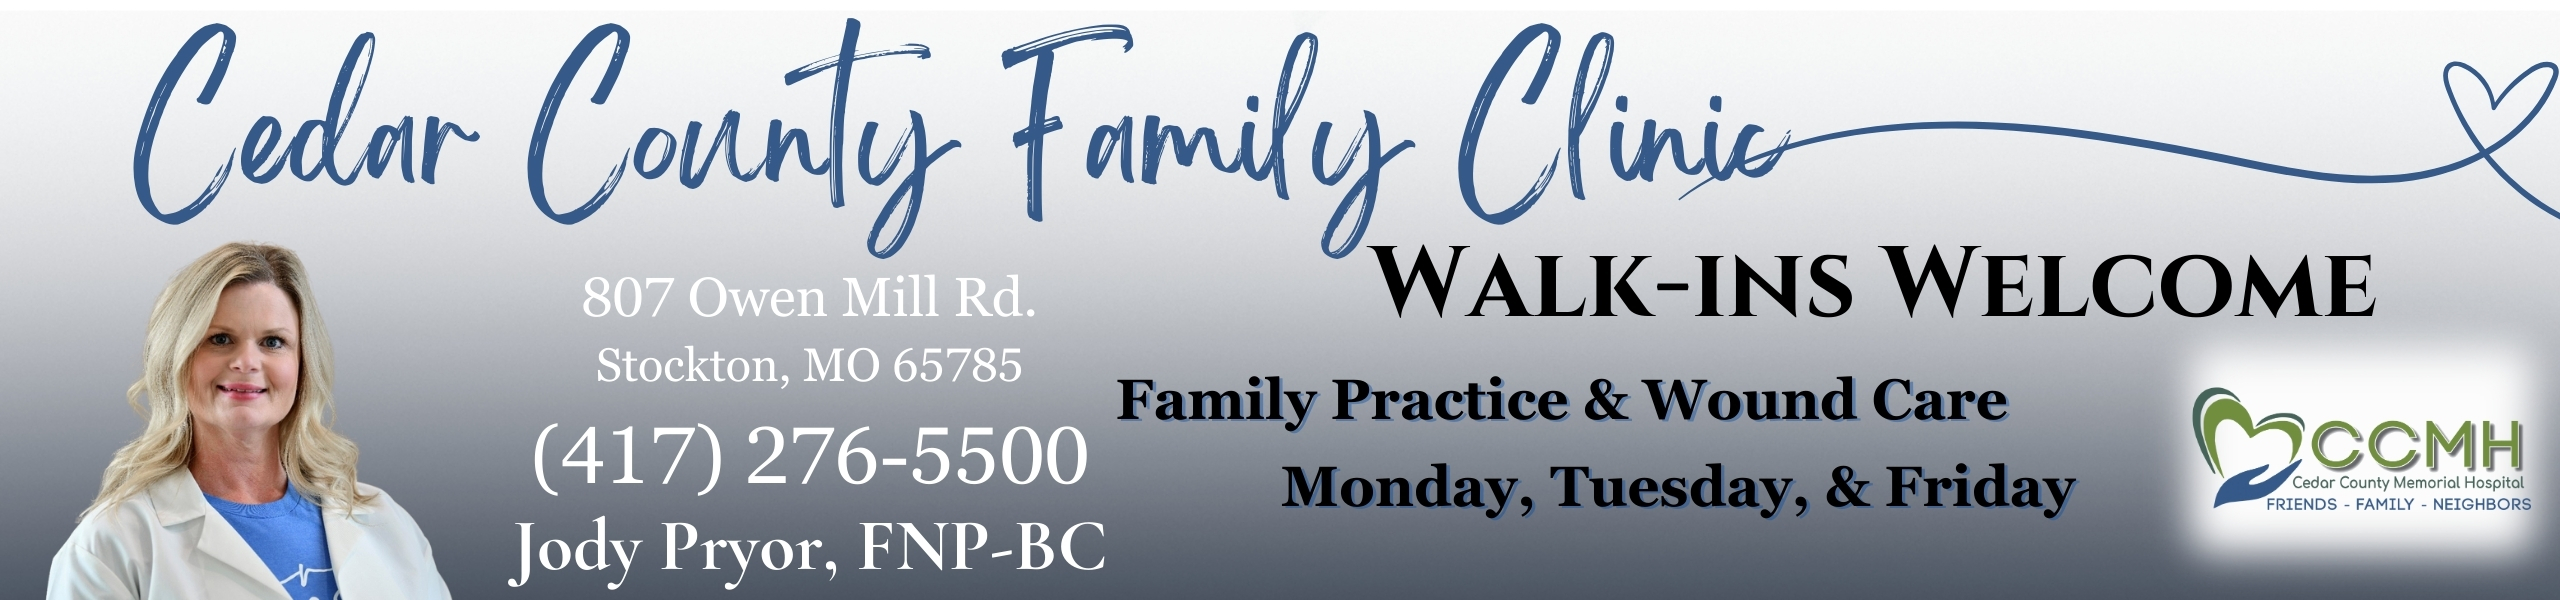 Jody Pryor Cedar County Family Clinic